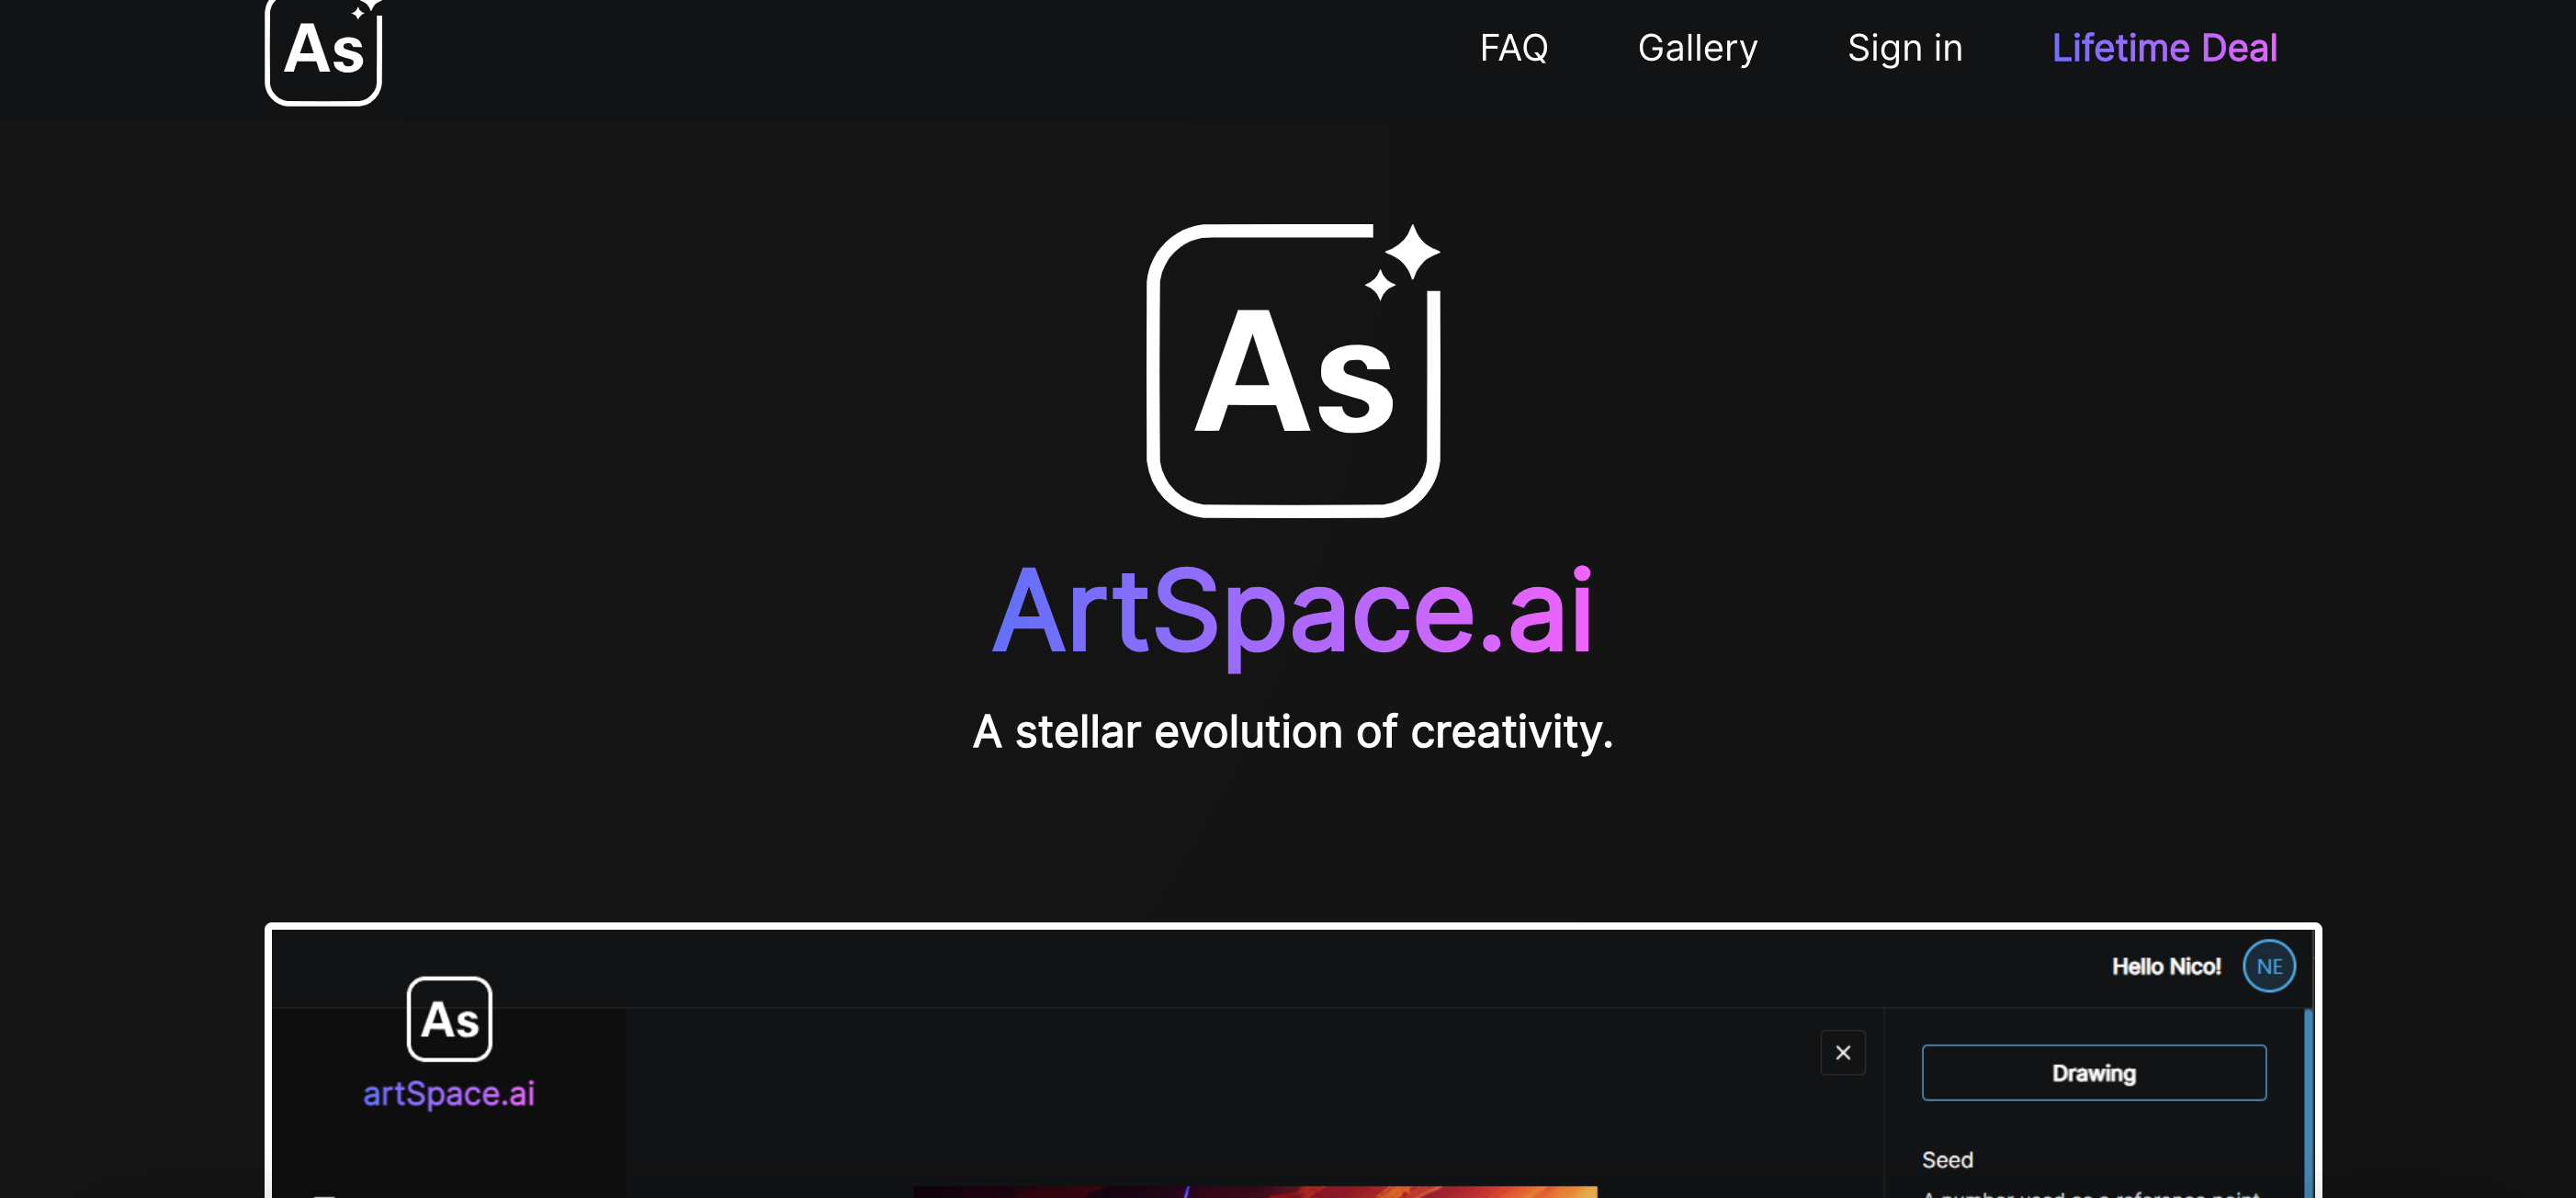 Captura de pantalla de la página web de ArtSpace.ai